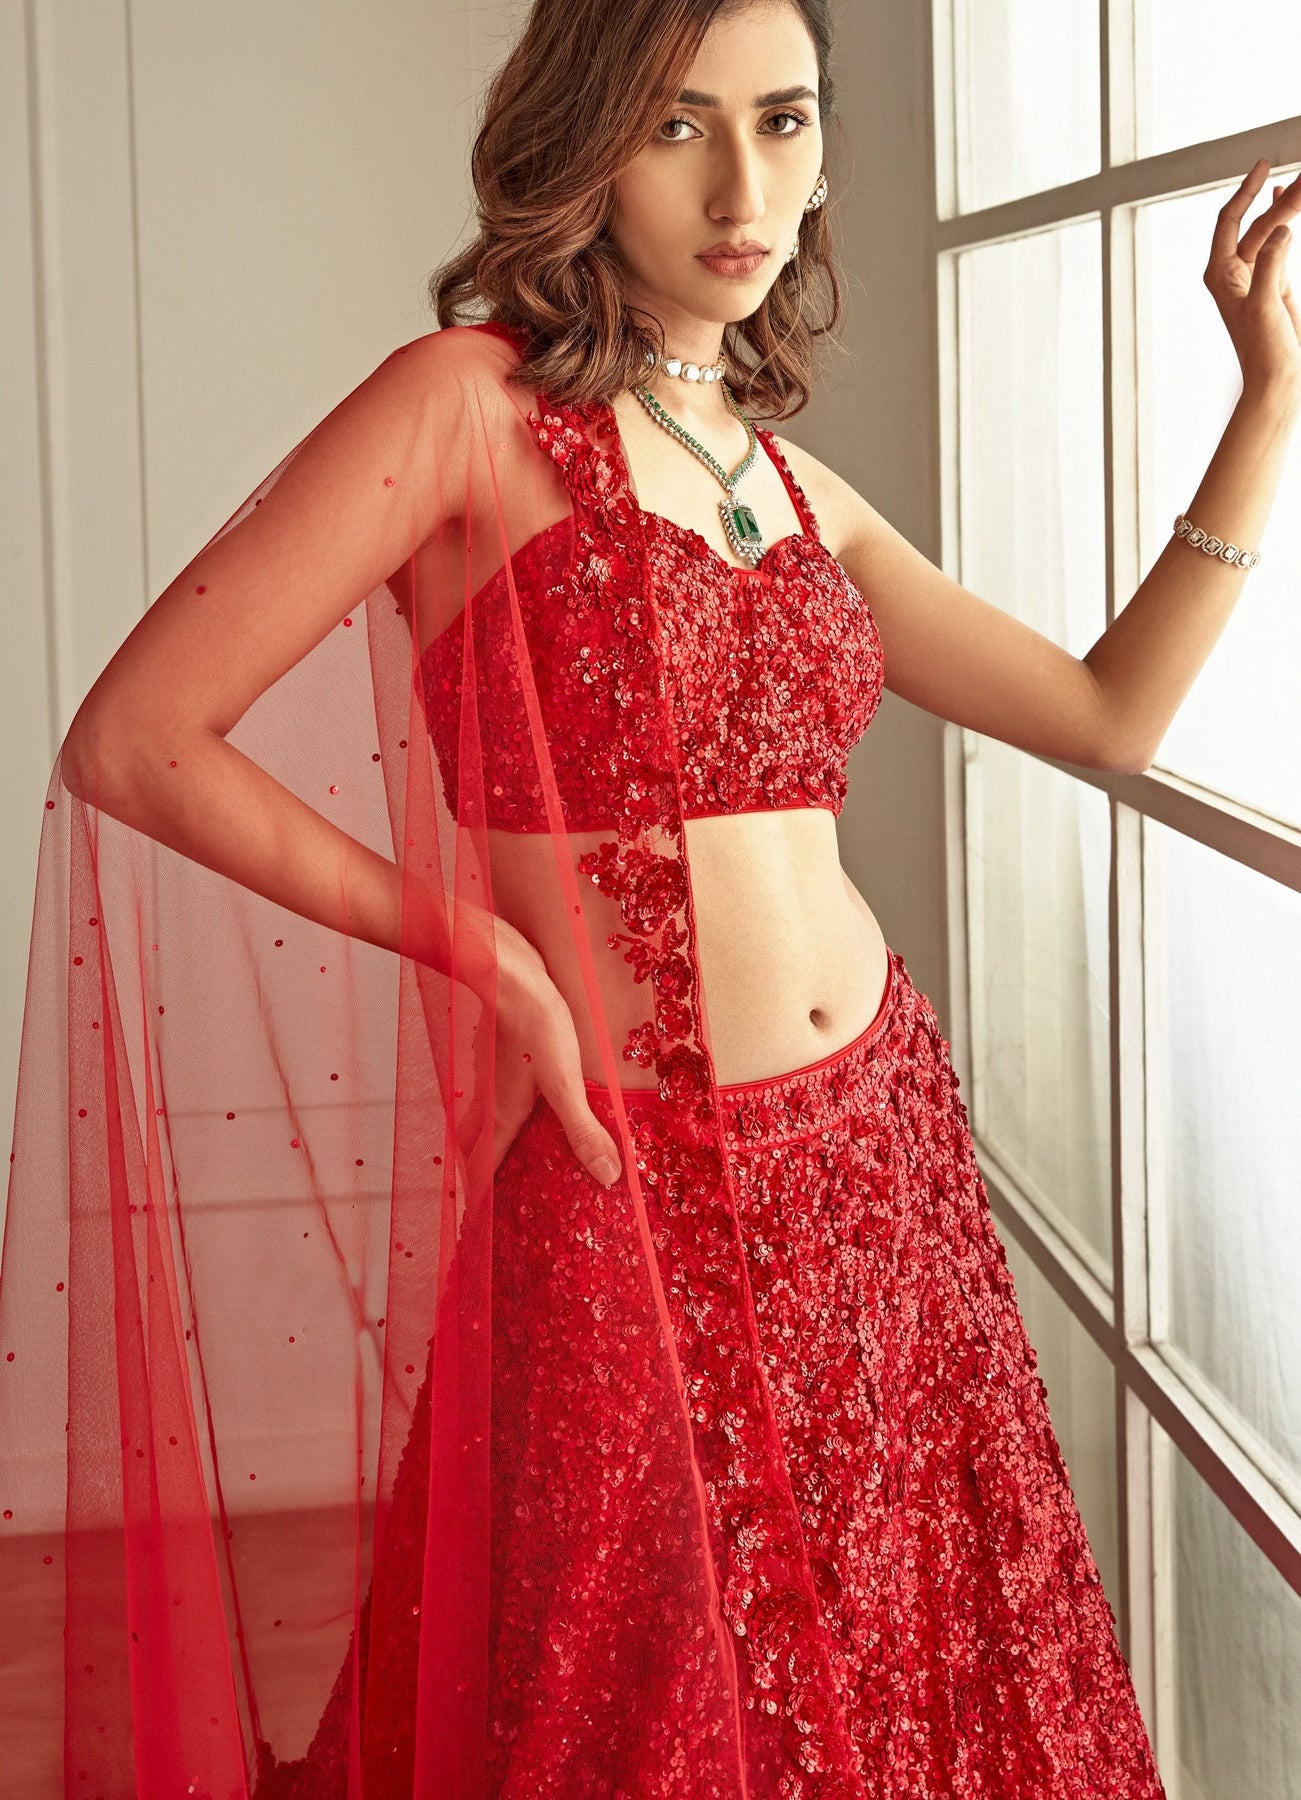 Ravishing In Red: Bridal Designs For The Upcoming Bridal Season